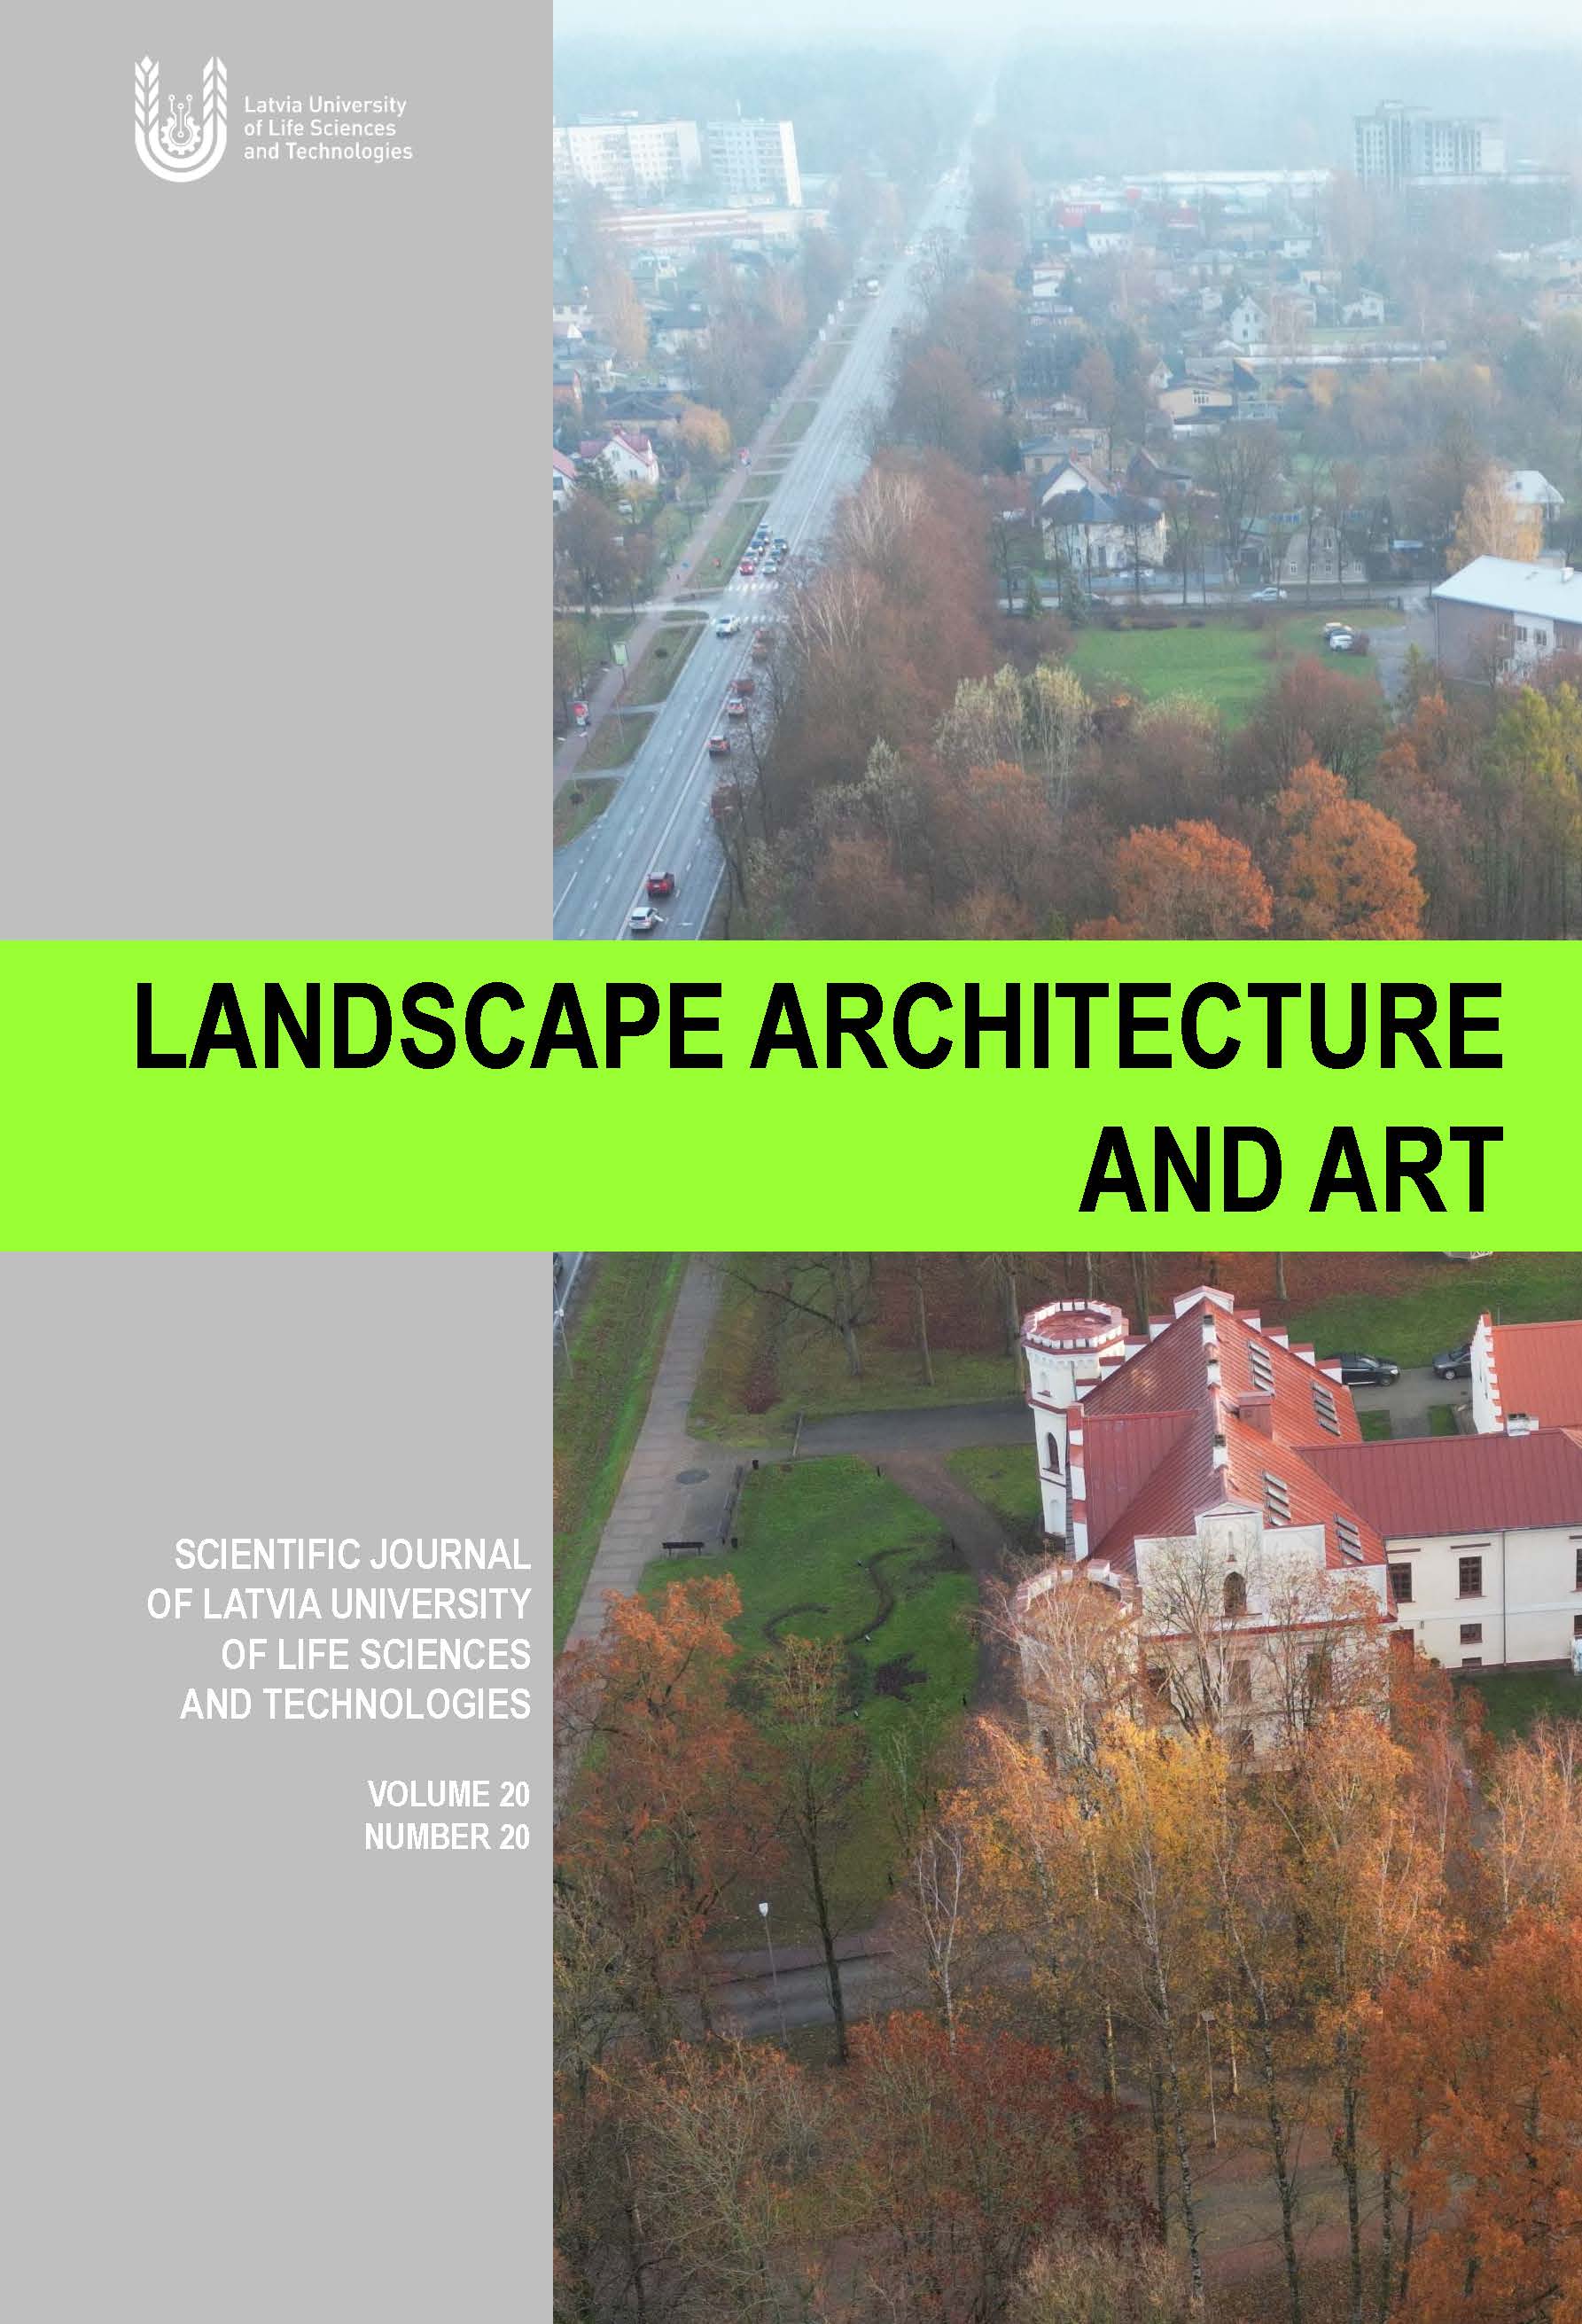 LANDSCAPE ARCHITECTURE AND ART